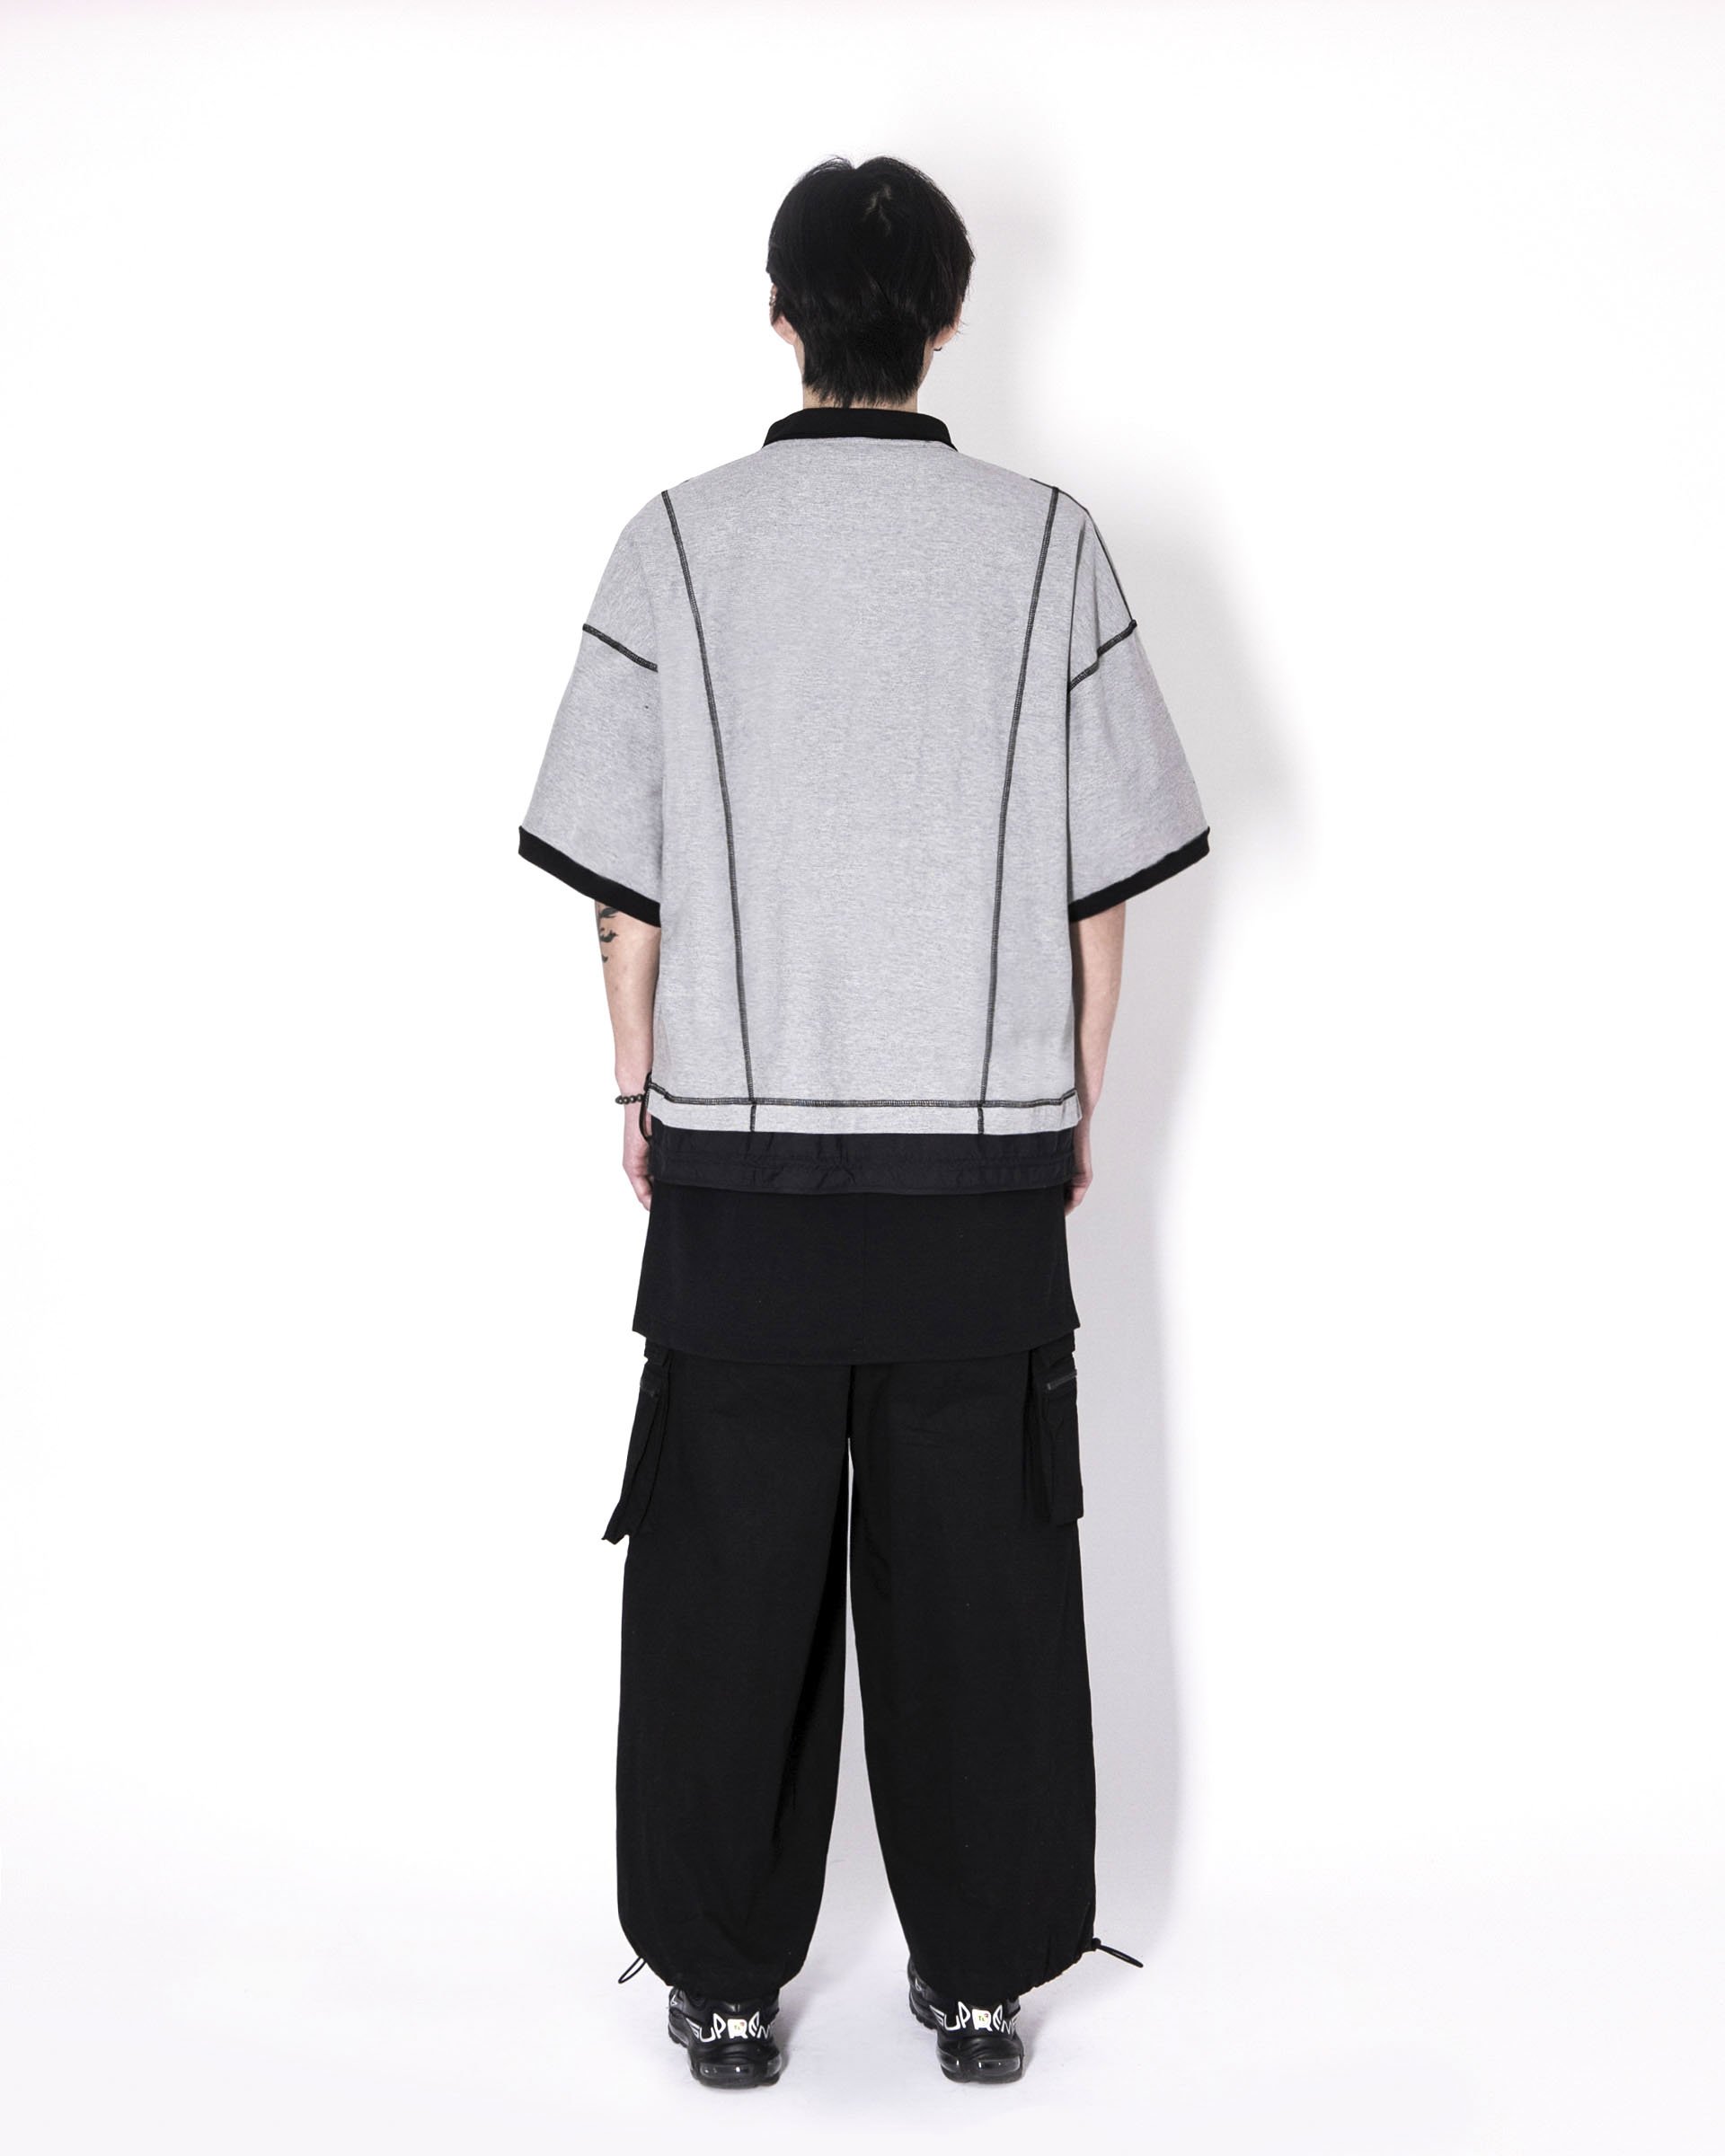 ER-SH-004] “Reversed 2-layered Polo Shirts” (Grey-Black) — errornyc